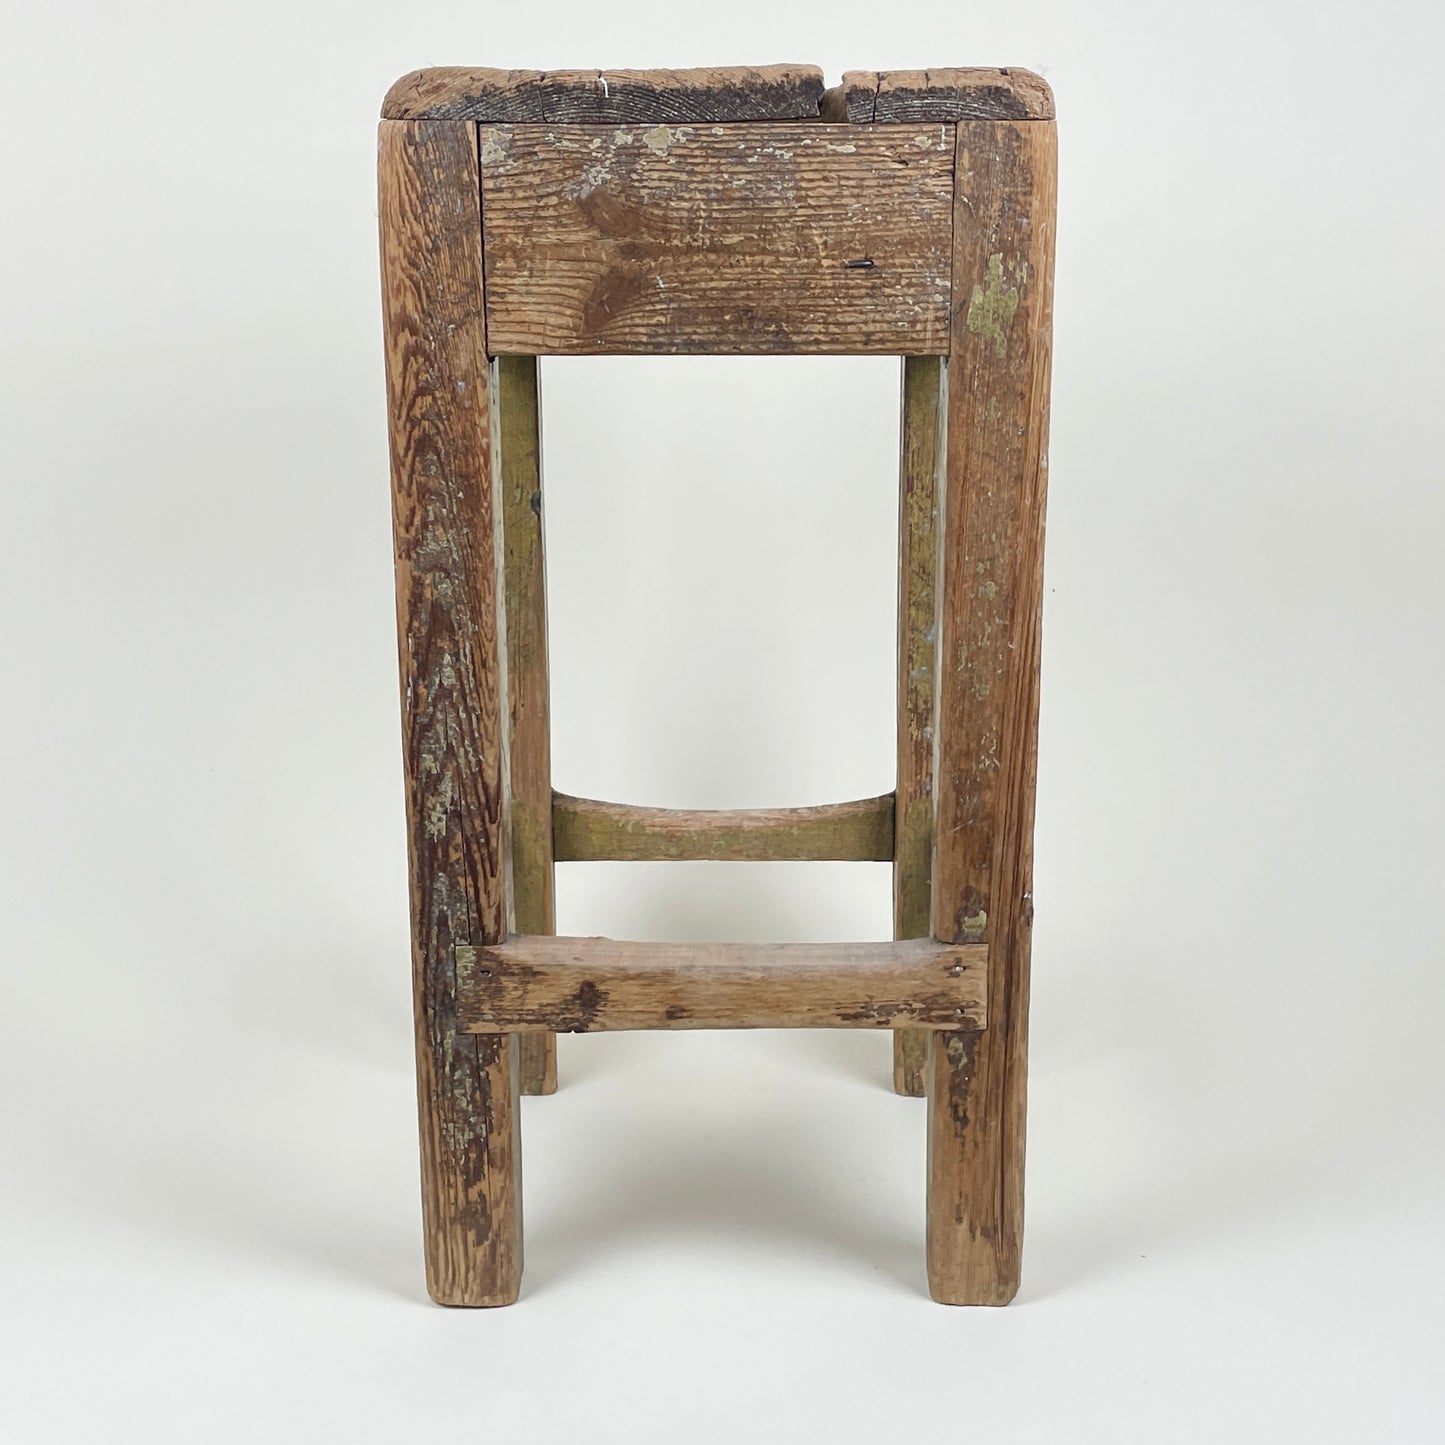 Vintage high wooden stool